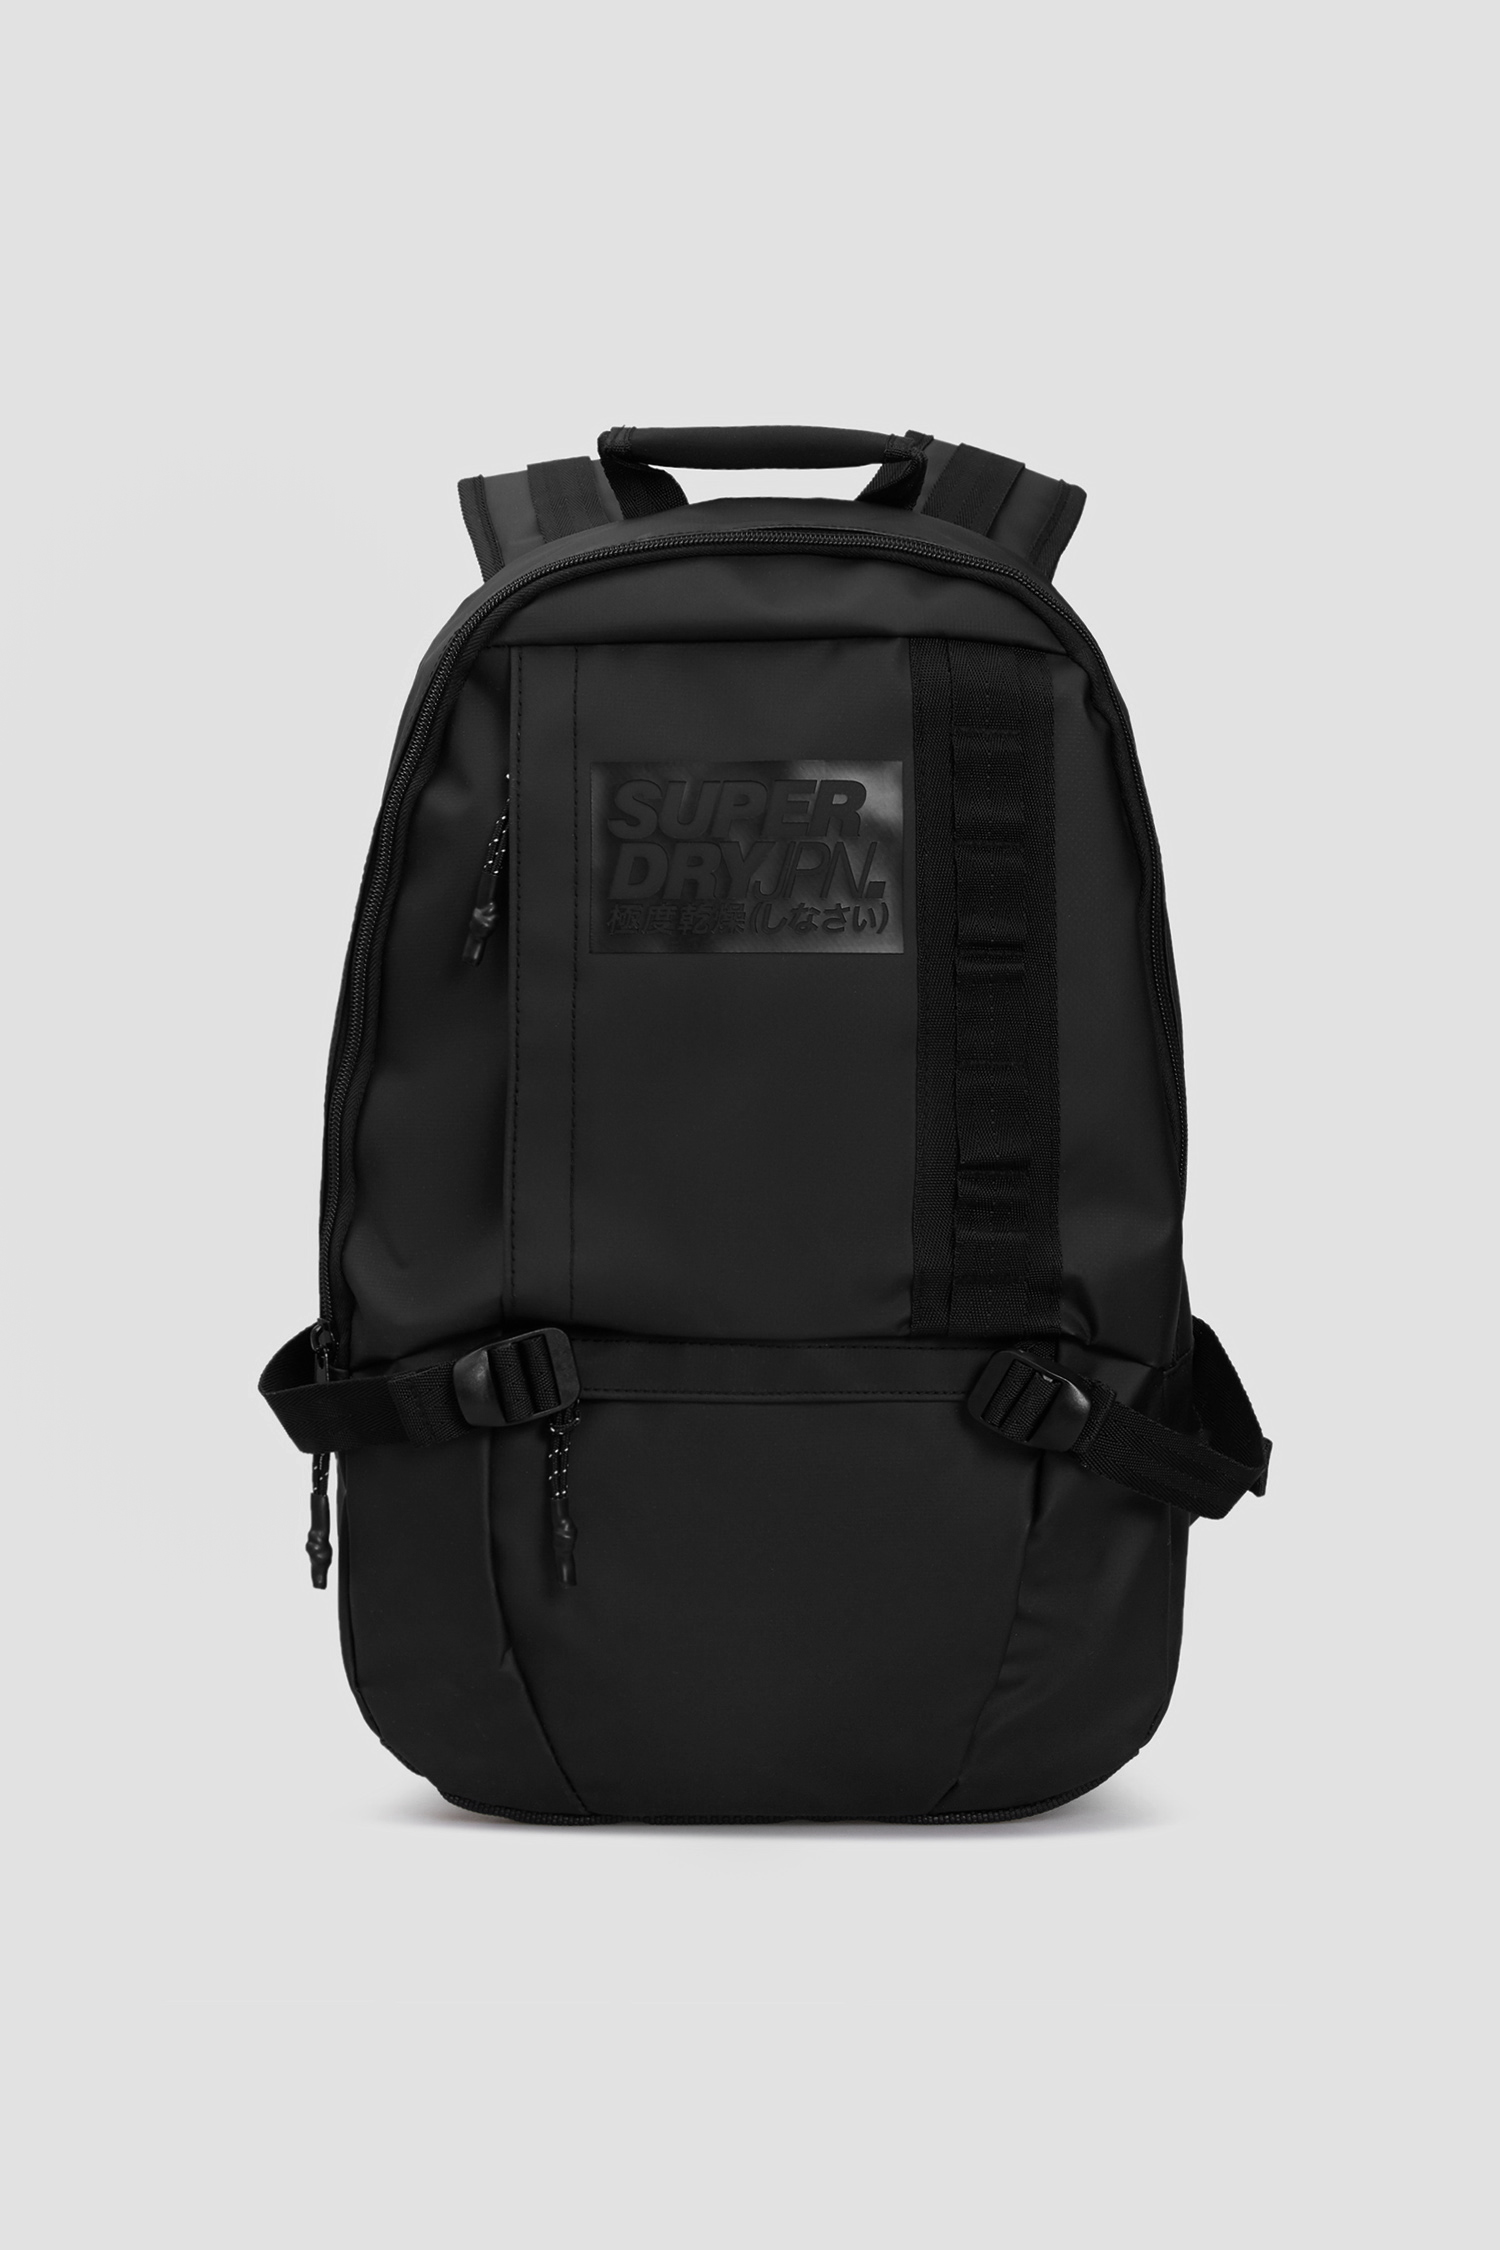 Чорний рюкзак для хлопців SuperDry M9110053A;02A